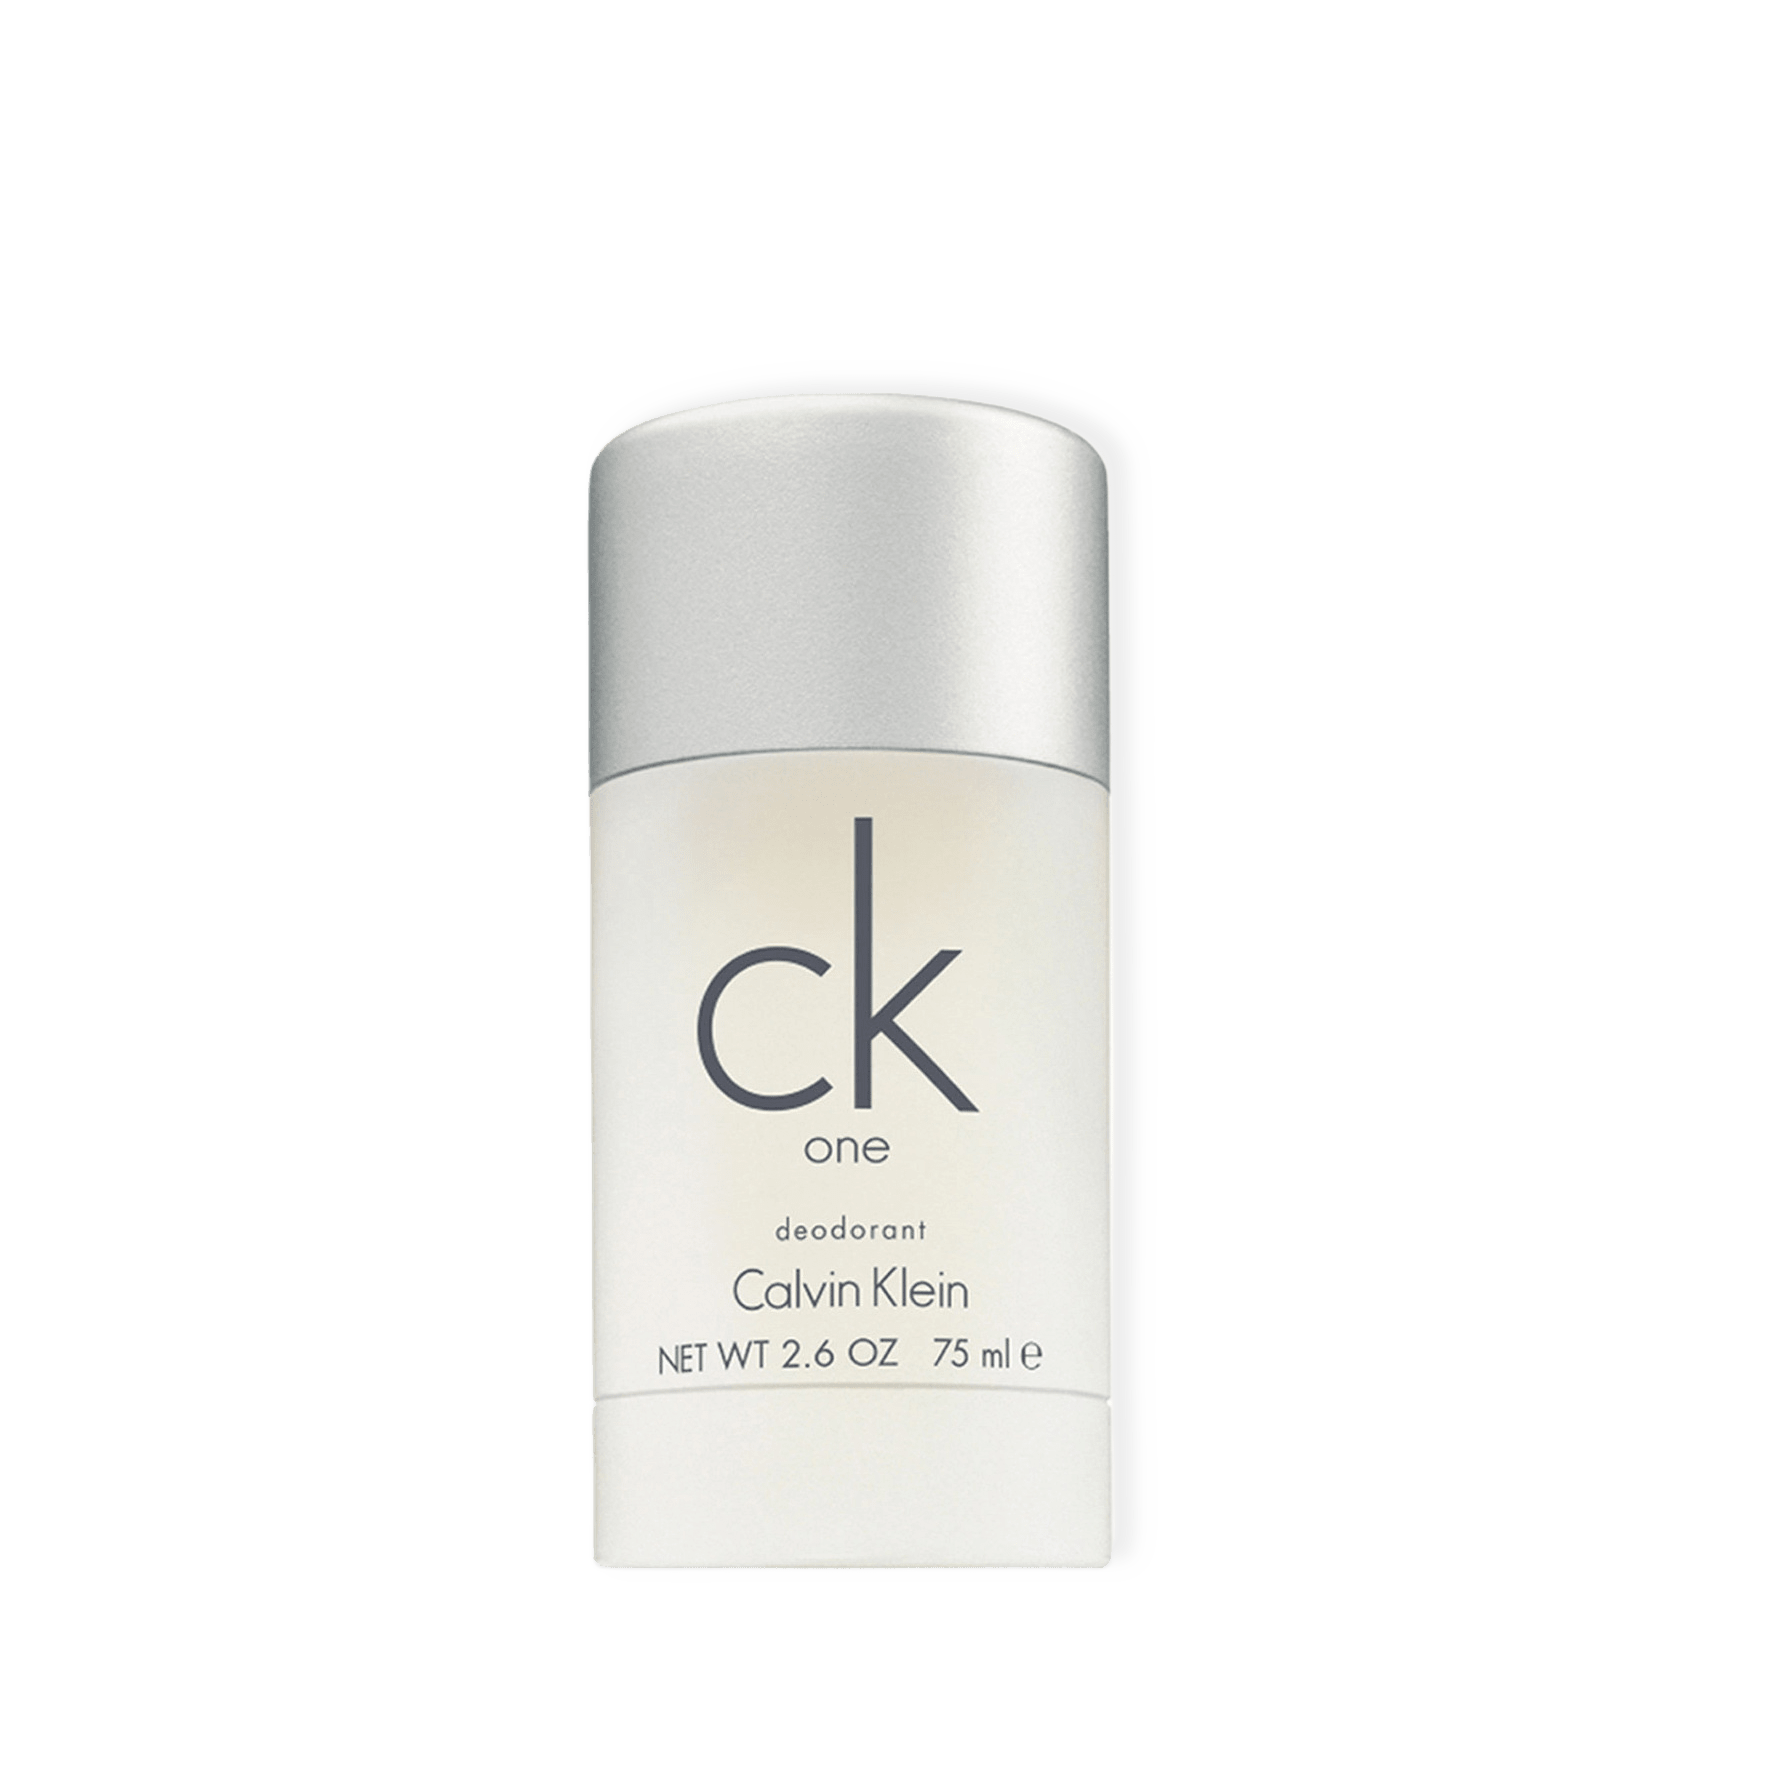 CK One Deodorant Stick från Calvin Klein